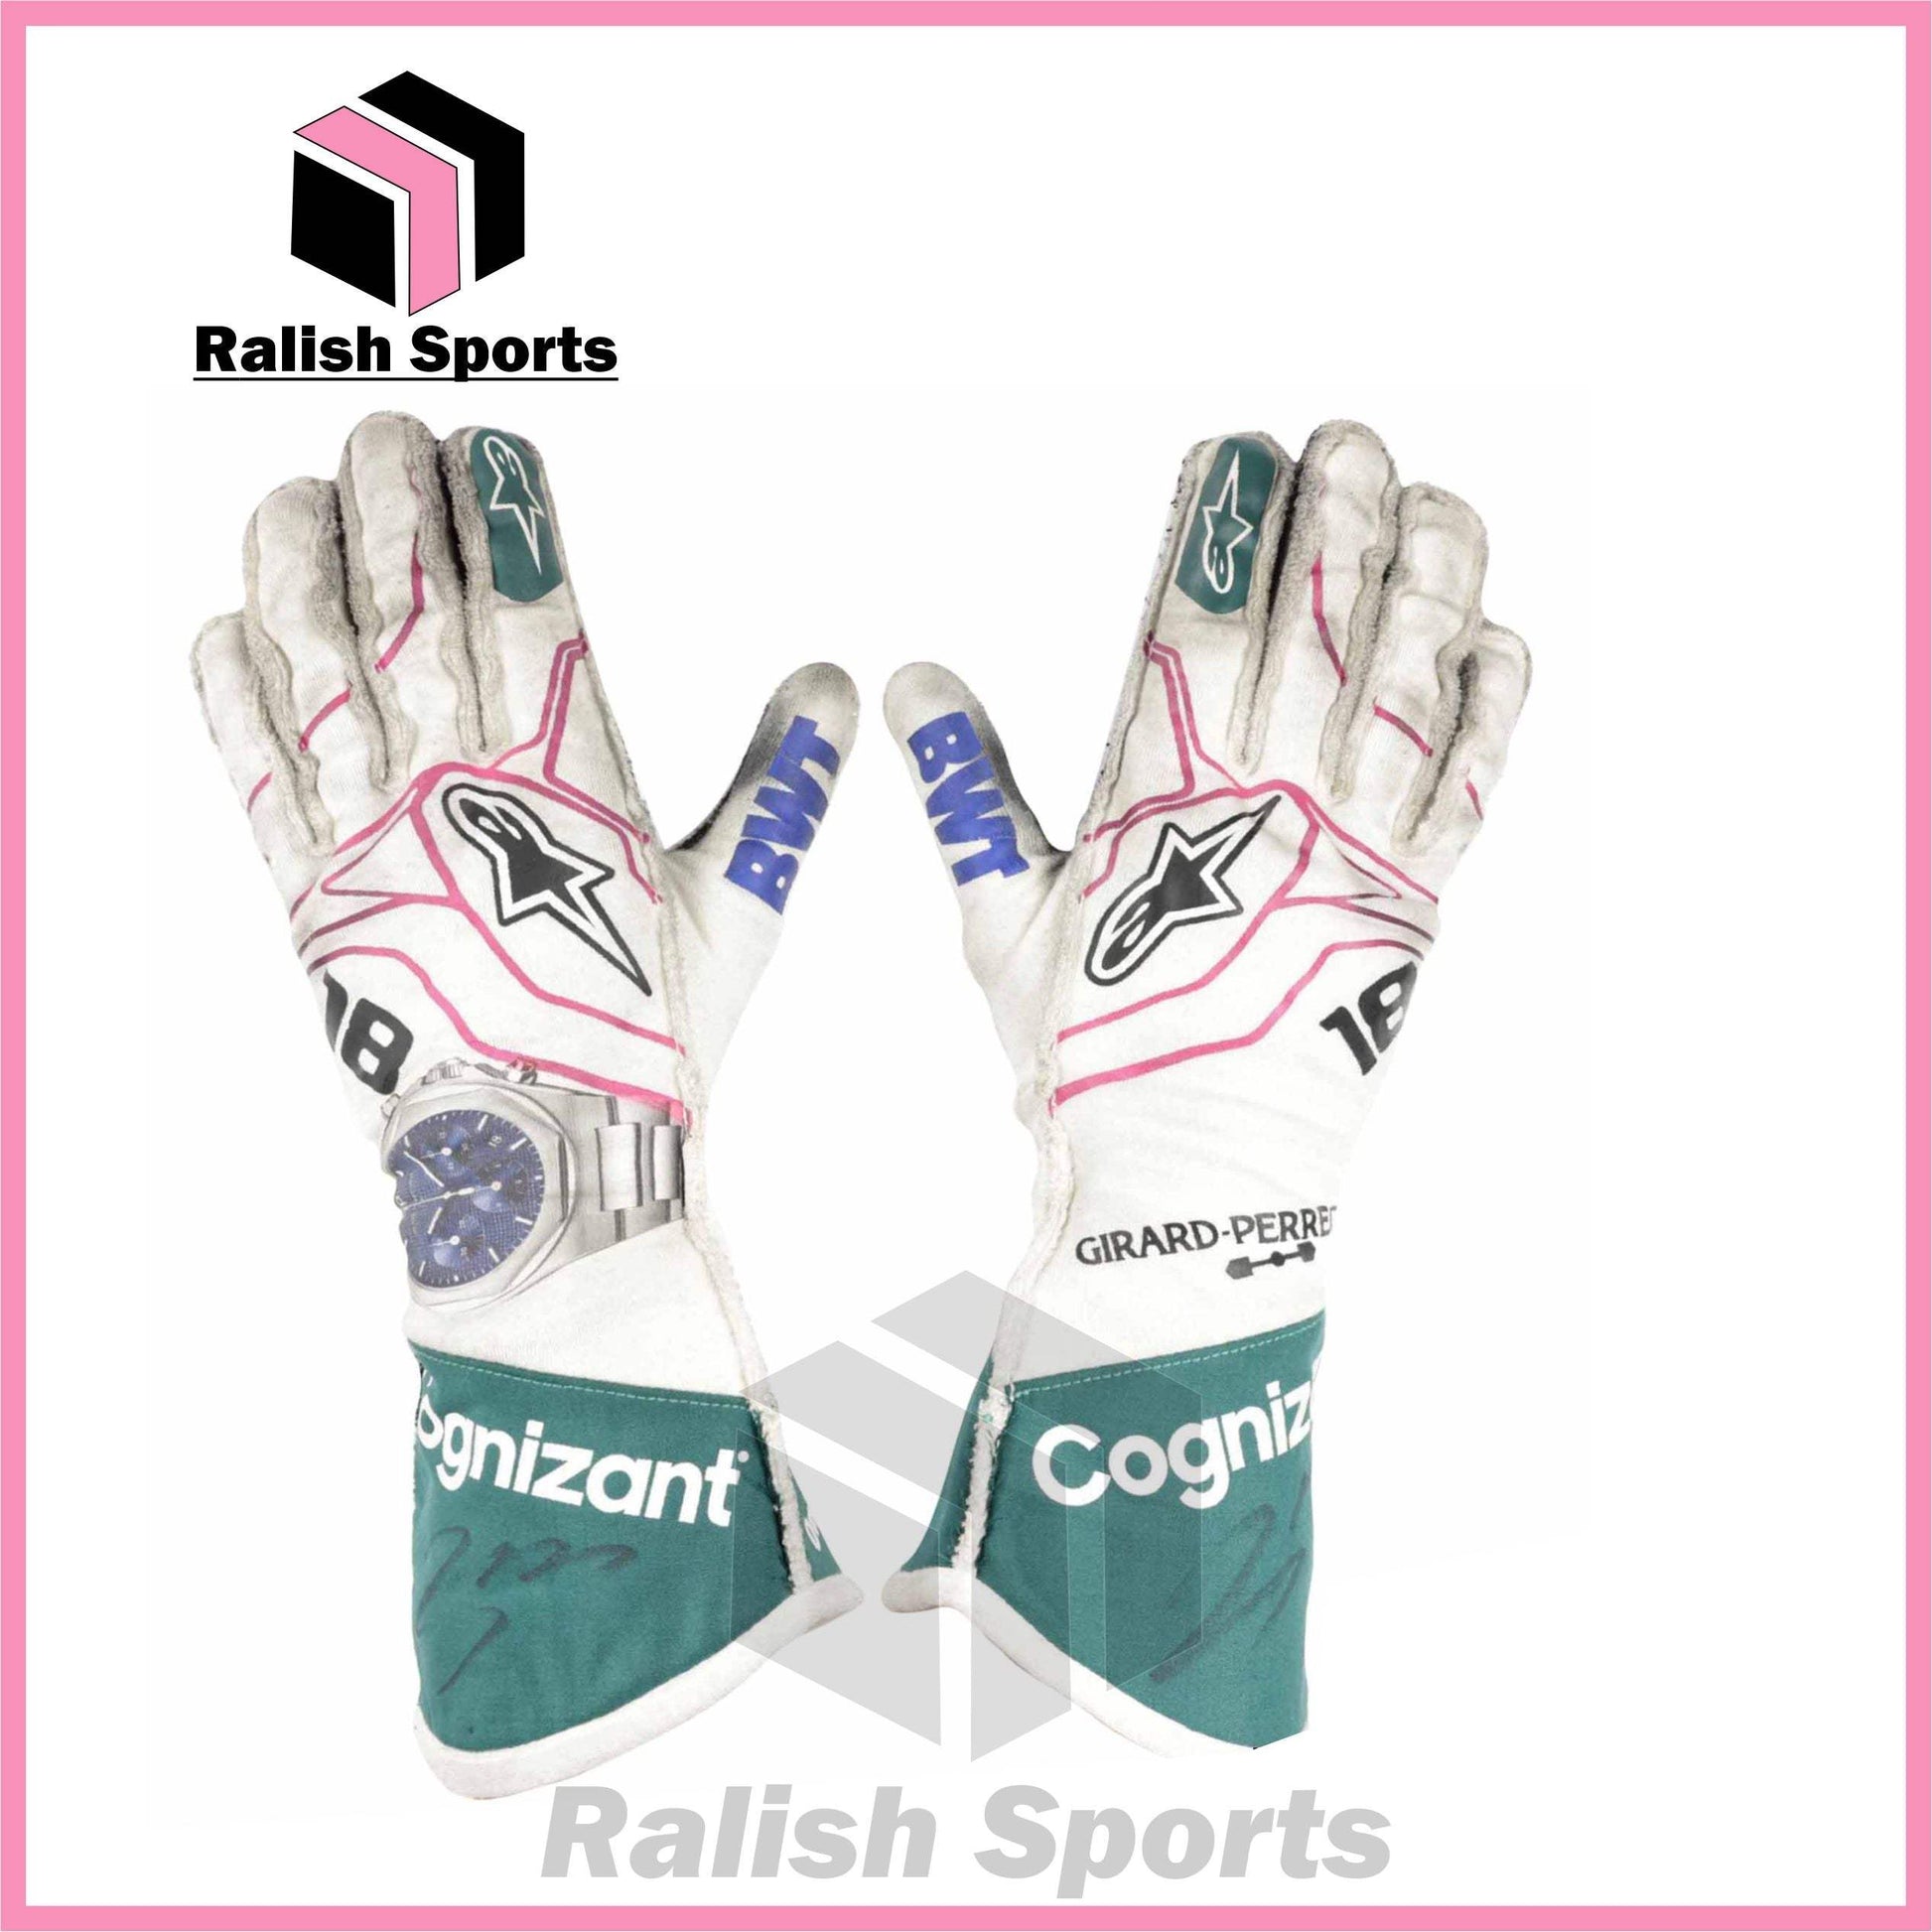 Lance Stroll 2021 Gloves - Ralish Sports